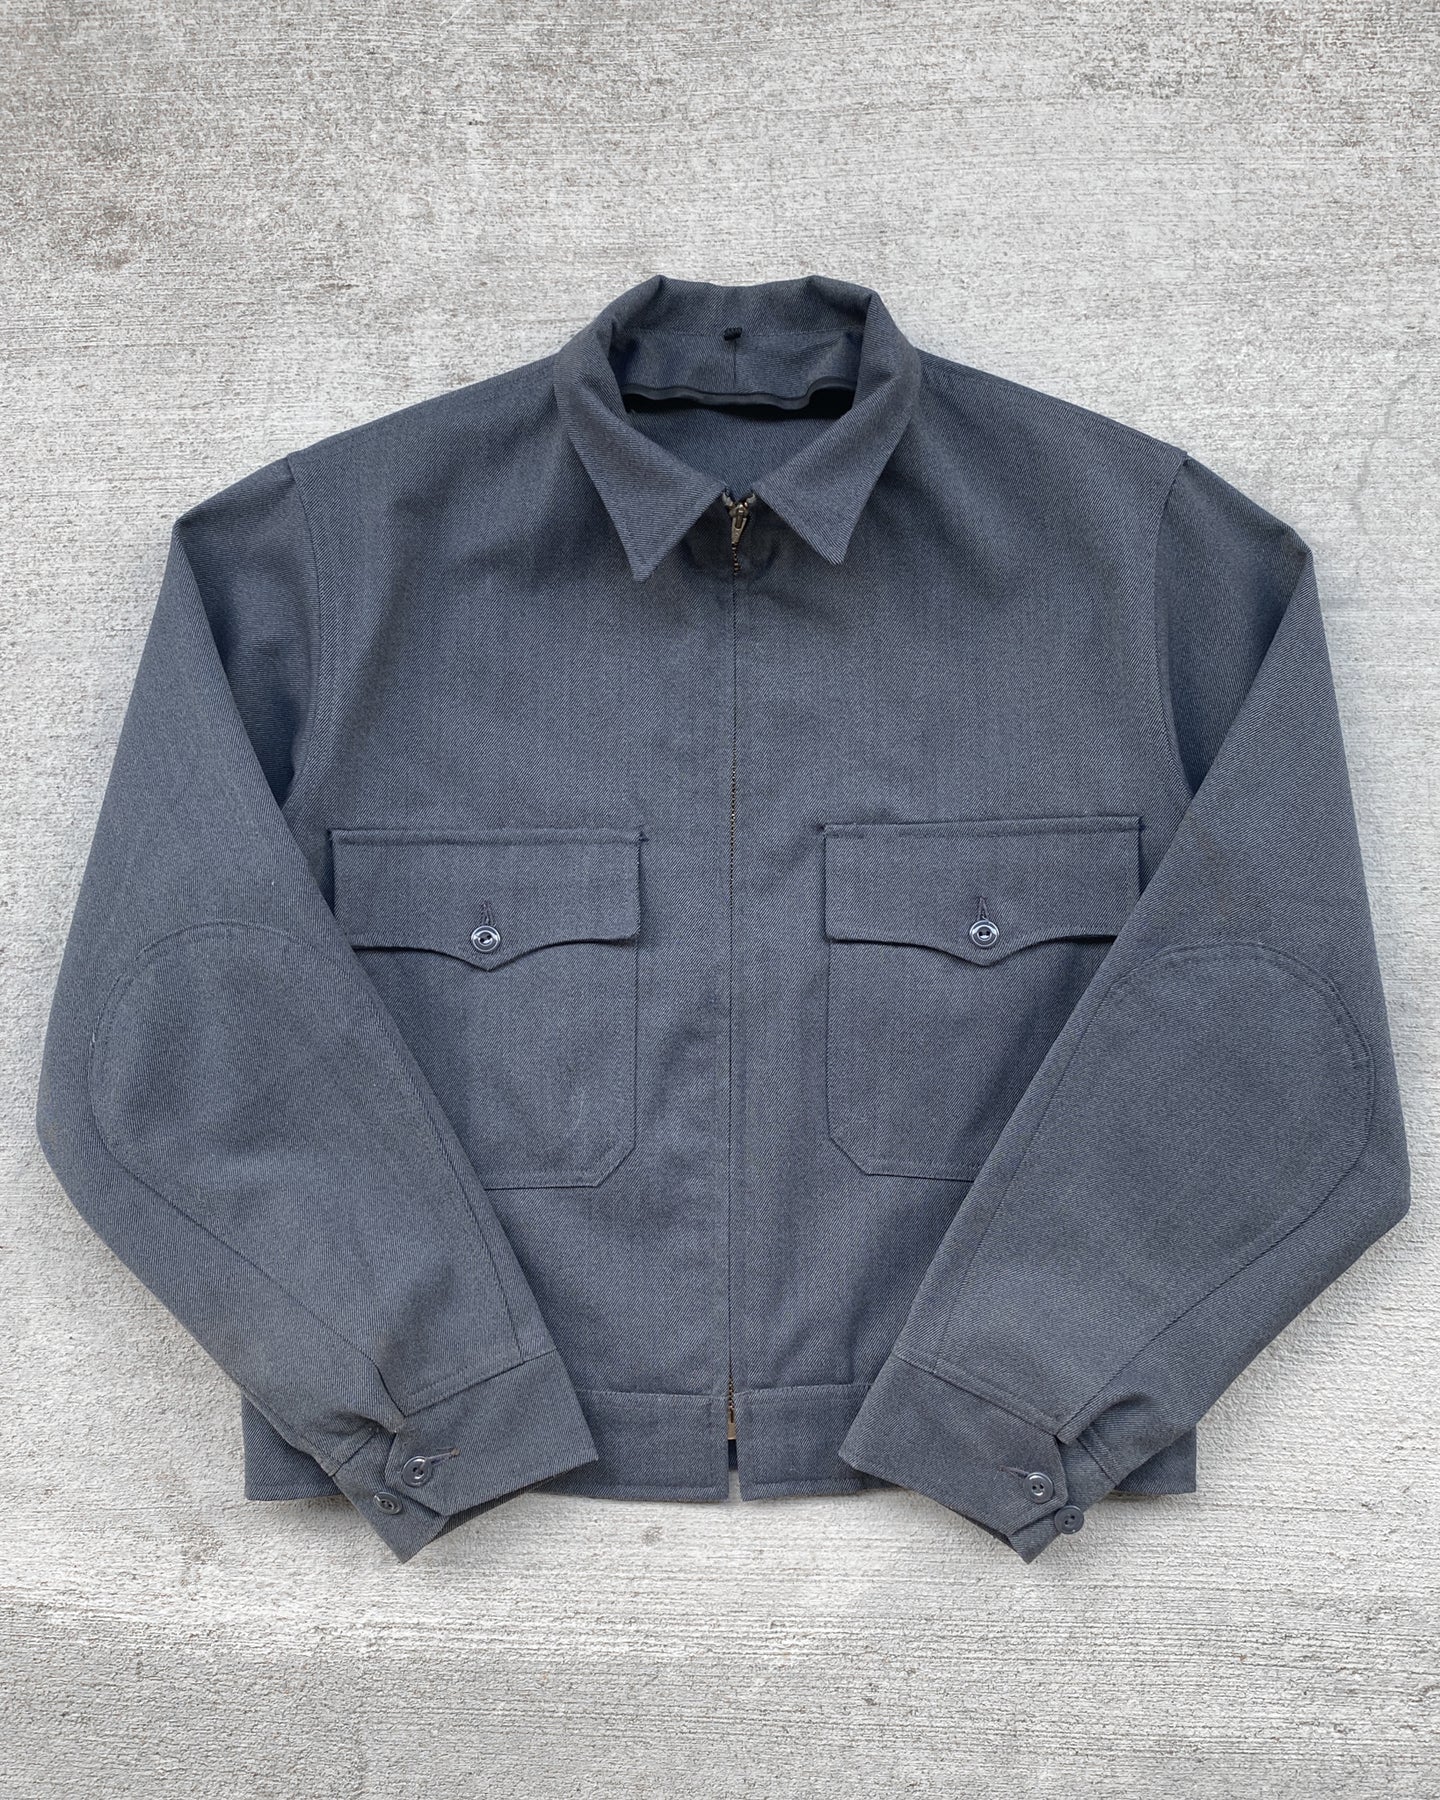 1960s Slate Pocketed Work Jacket with Talon Zipper - Size Large